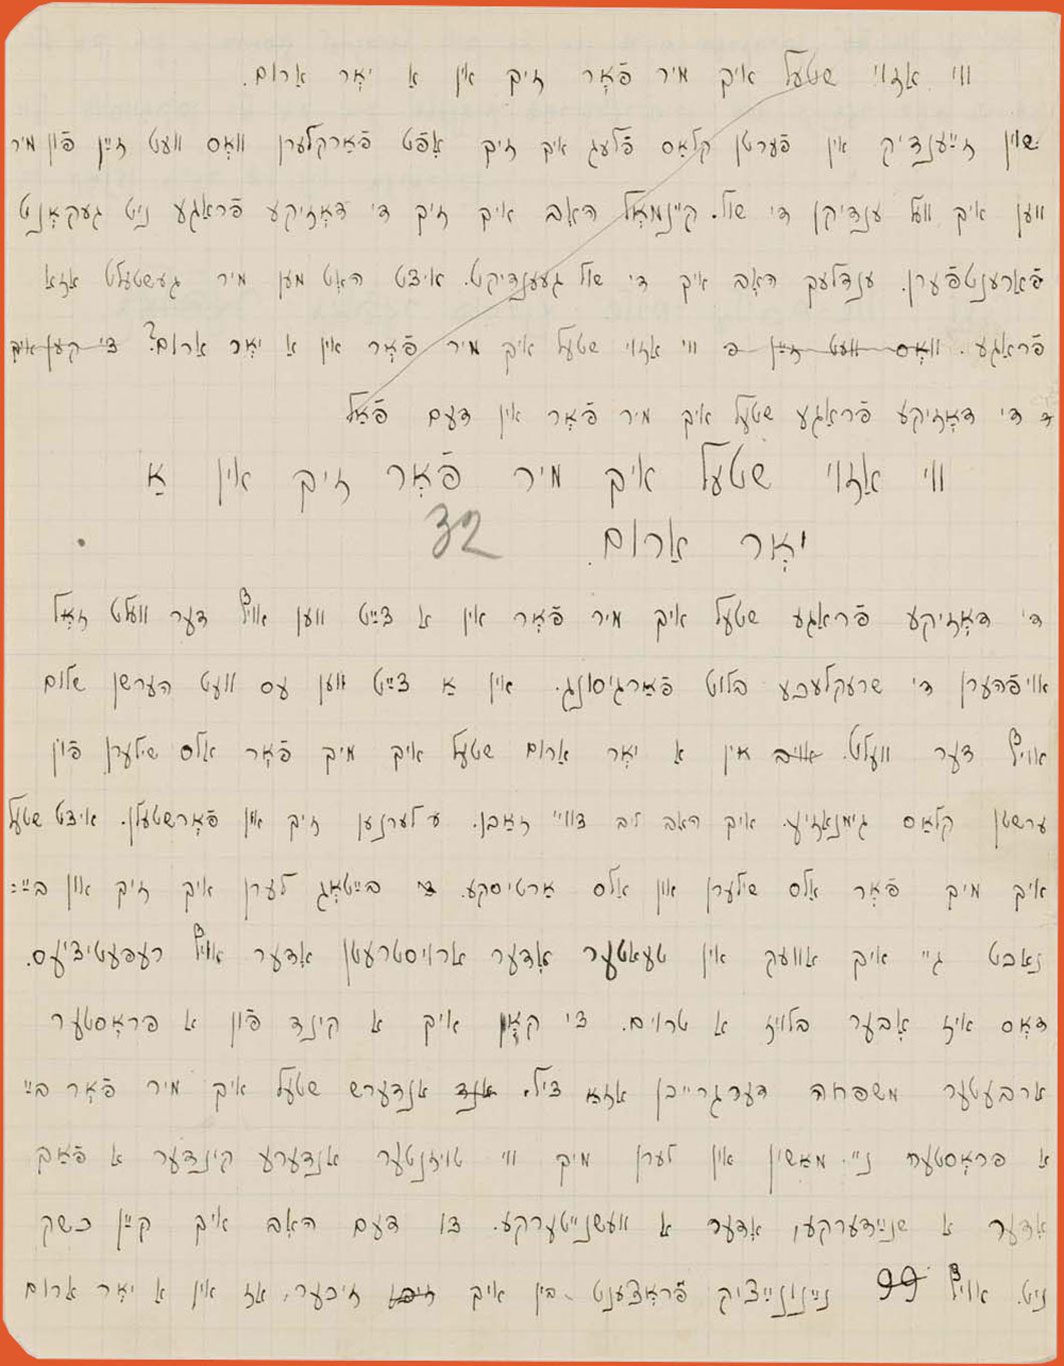 School essay written in Yiddish